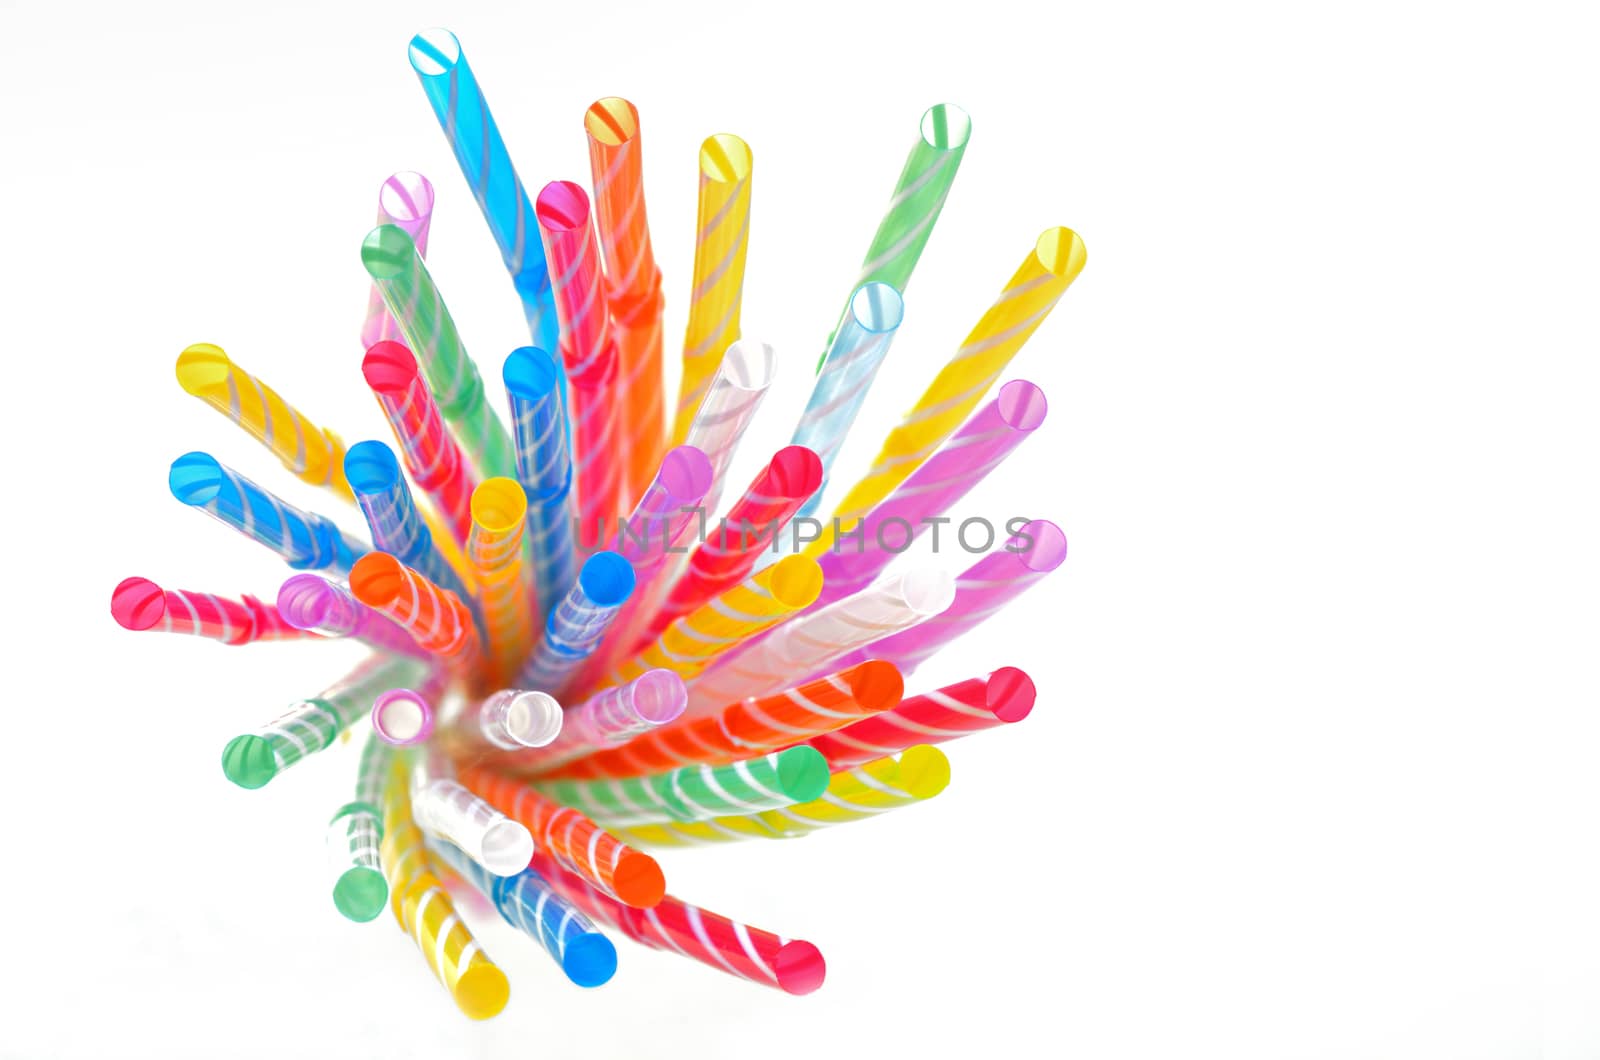 multi color flexible straws on white background